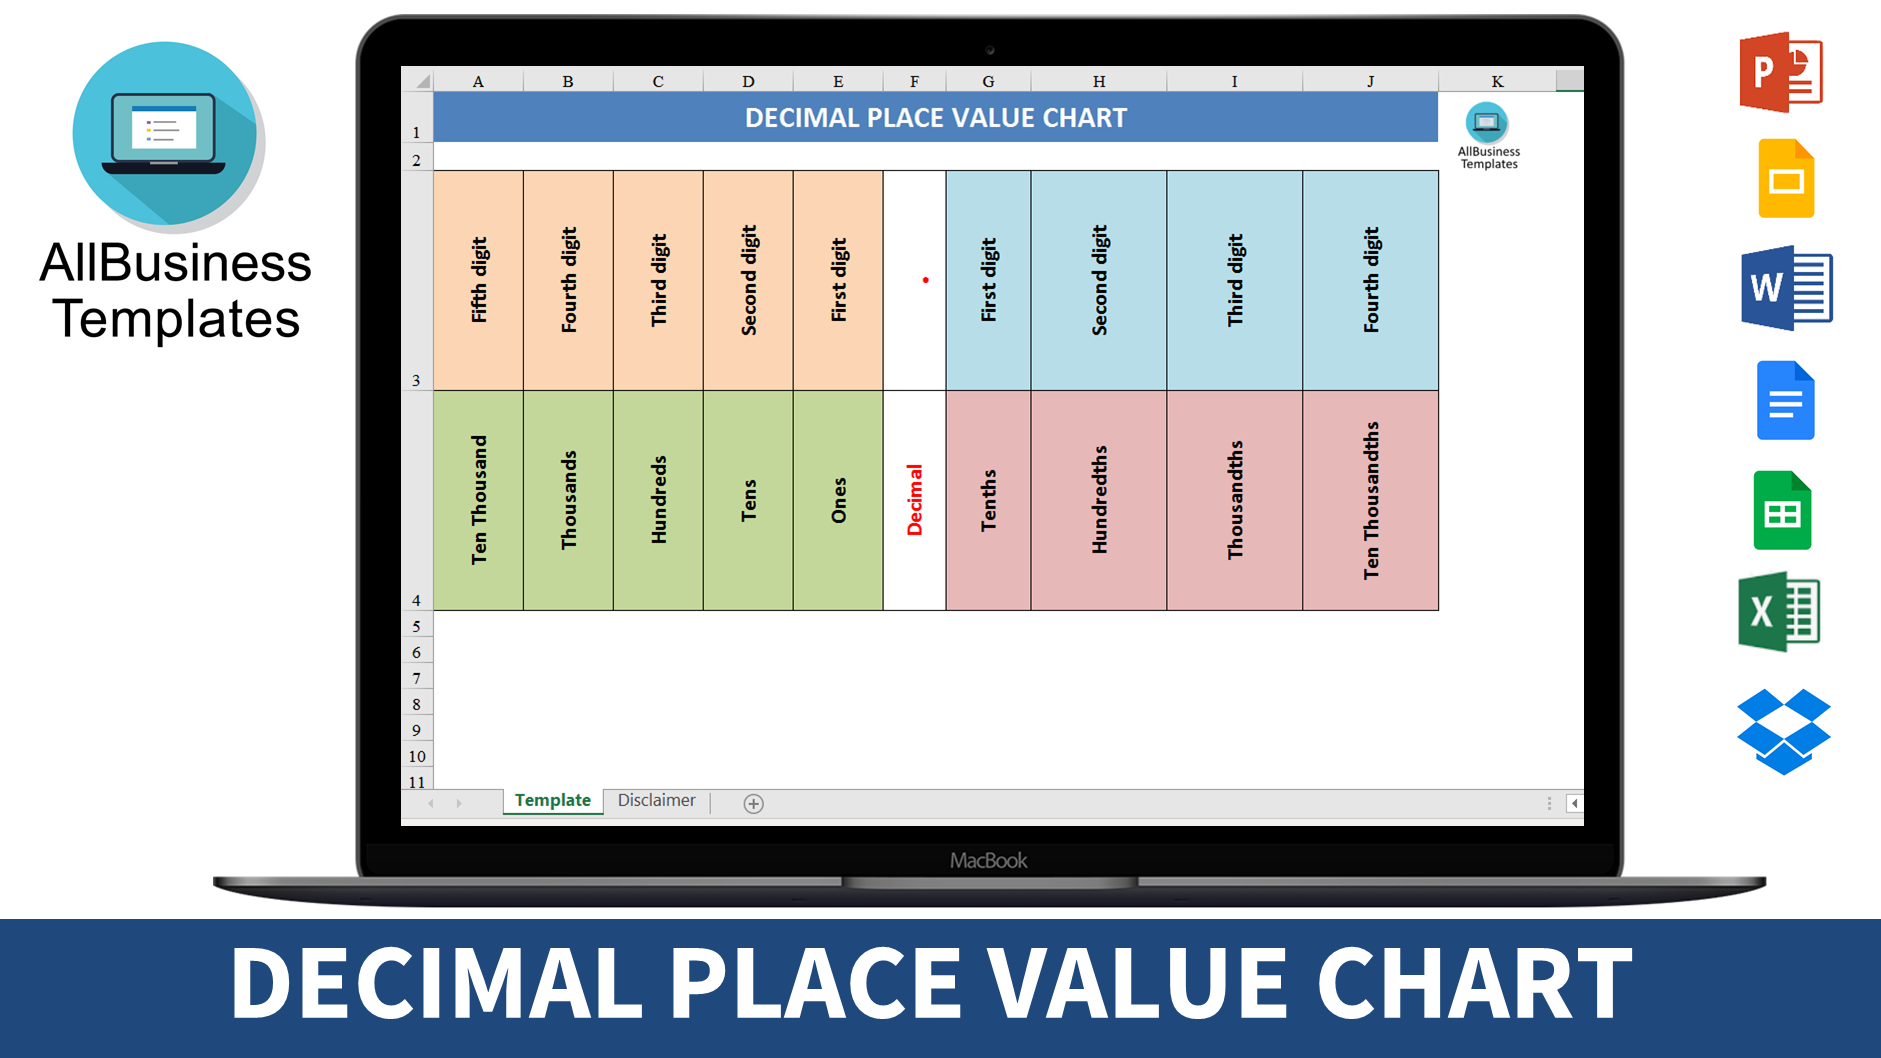 Decimal place value chart main image